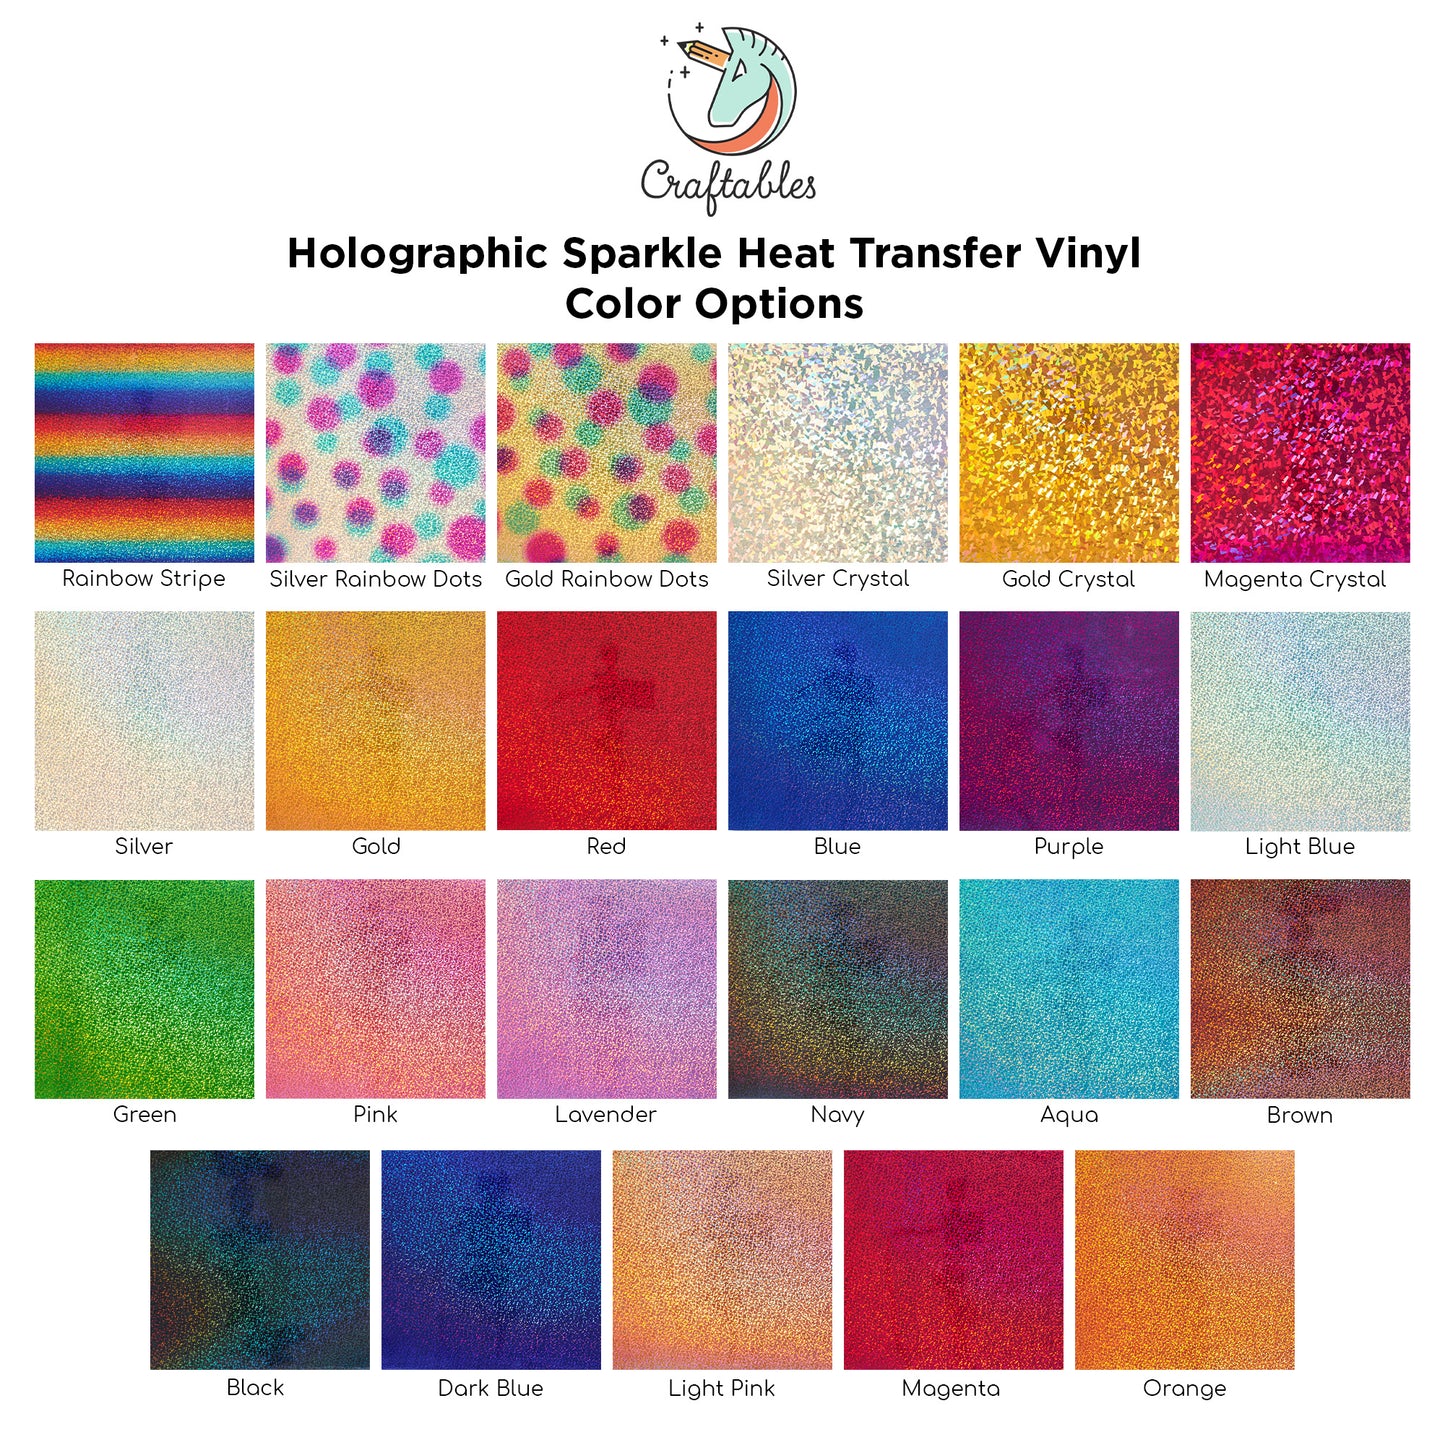 Aqua Holographic Sparkle Heat Transfer Vinyl Rolls By Craftables